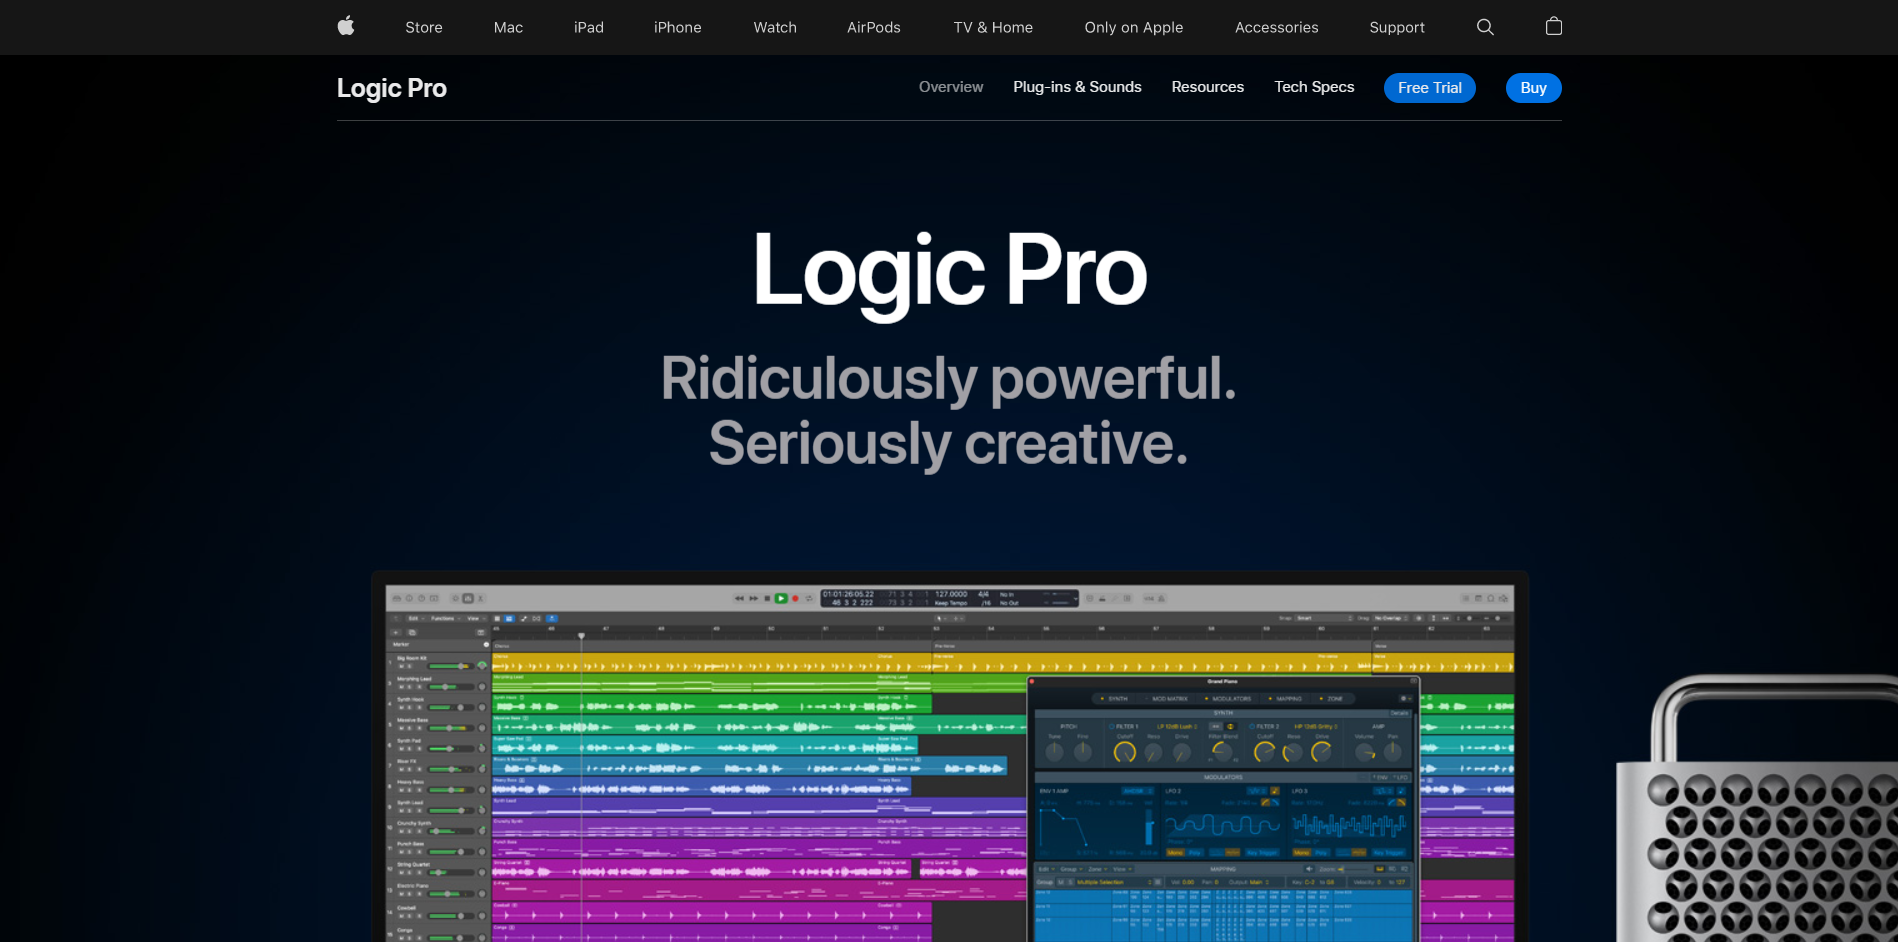 Logic Pro Key Features